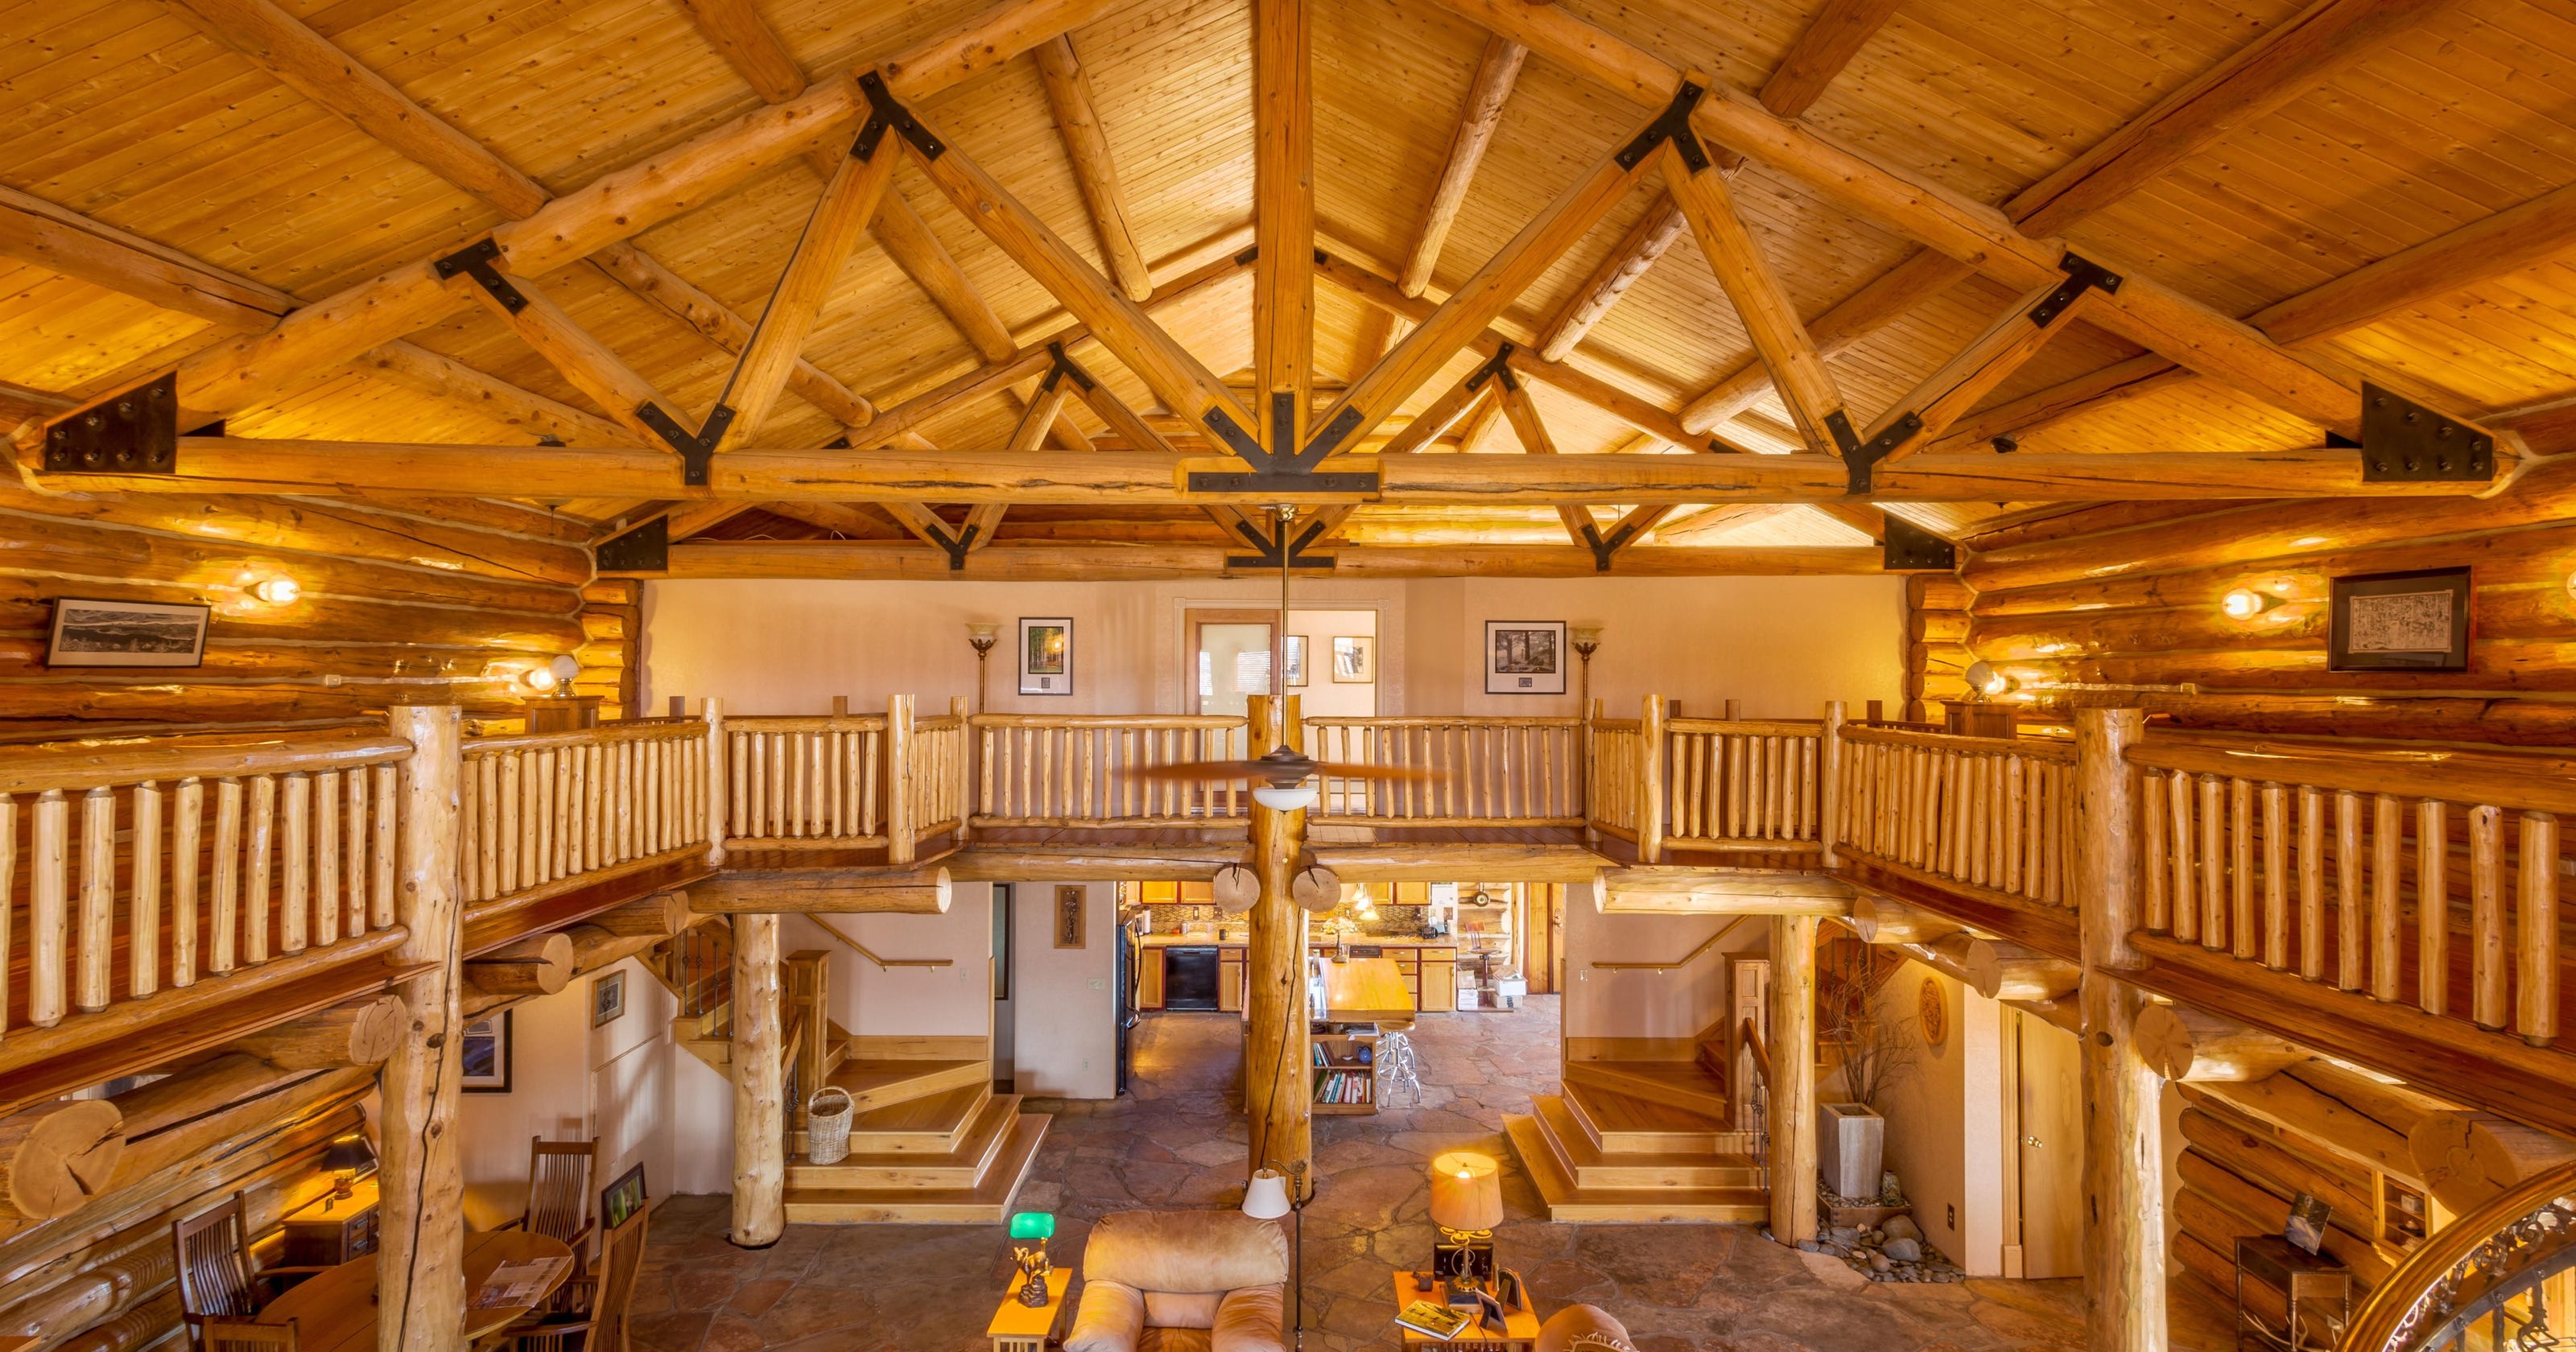 Home of the week Luxury log cabin